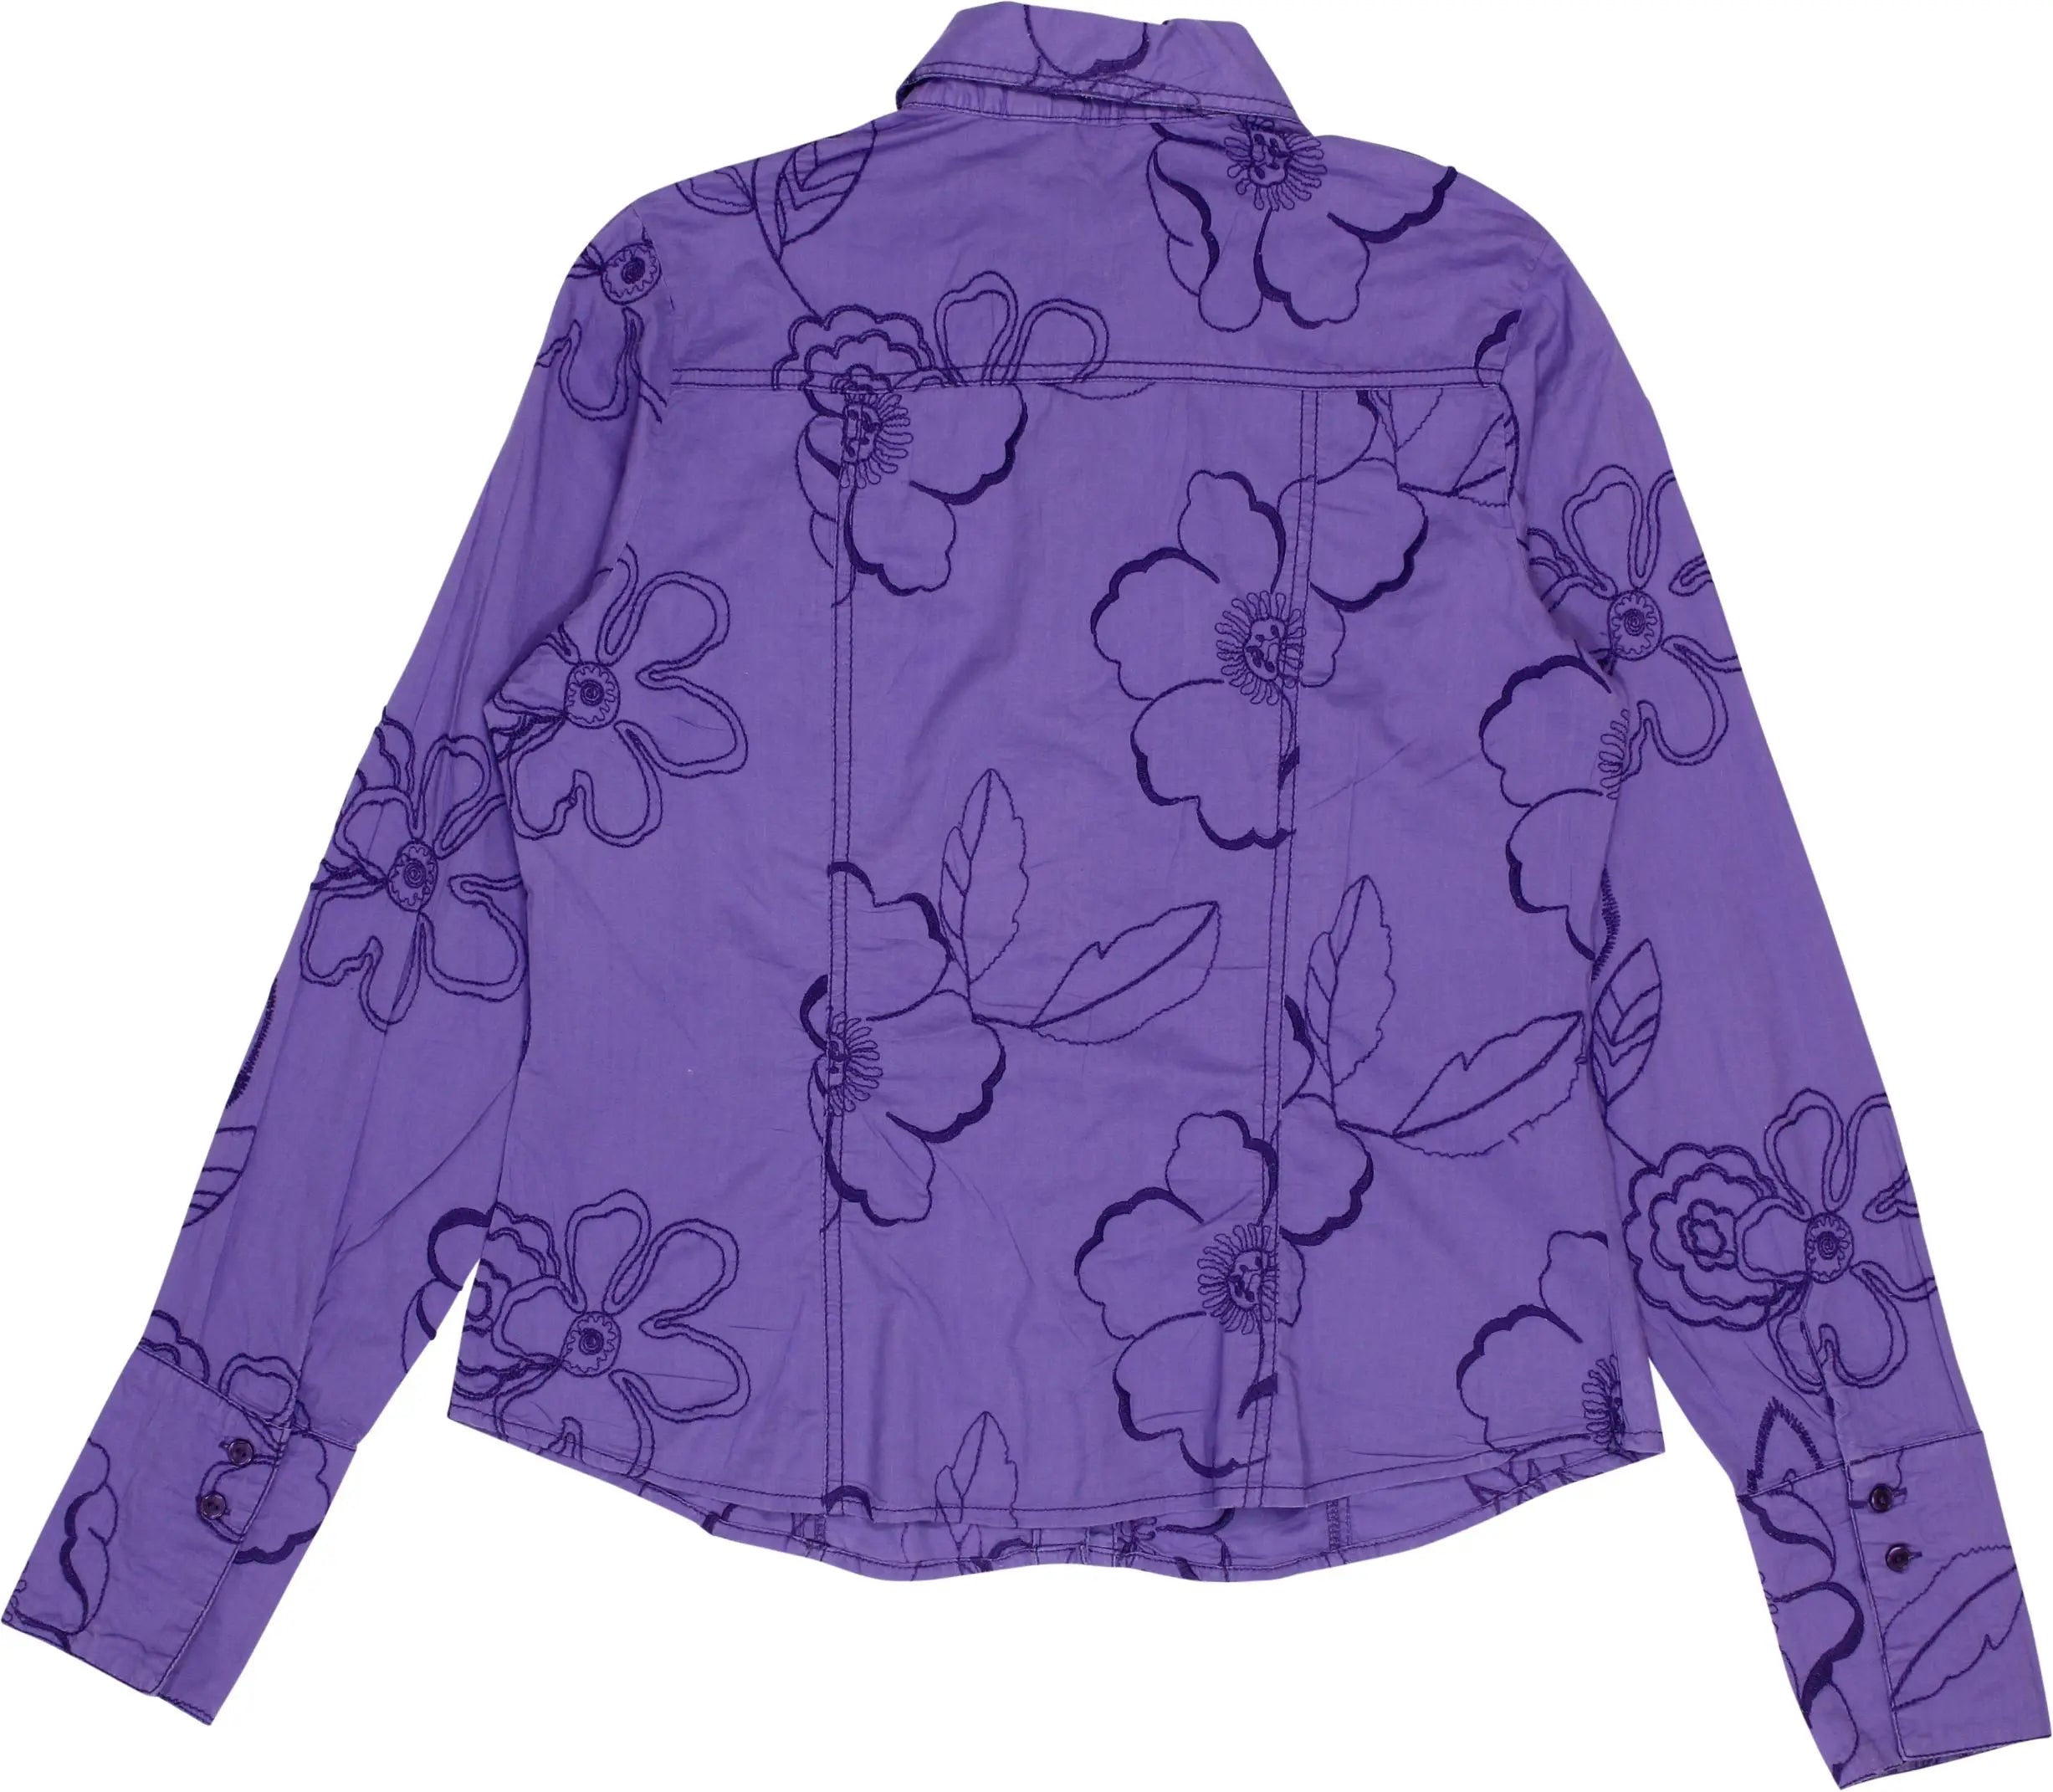 Miss Etam - Purple Shirt- ThriftTale.com - Vintage and second handclothing